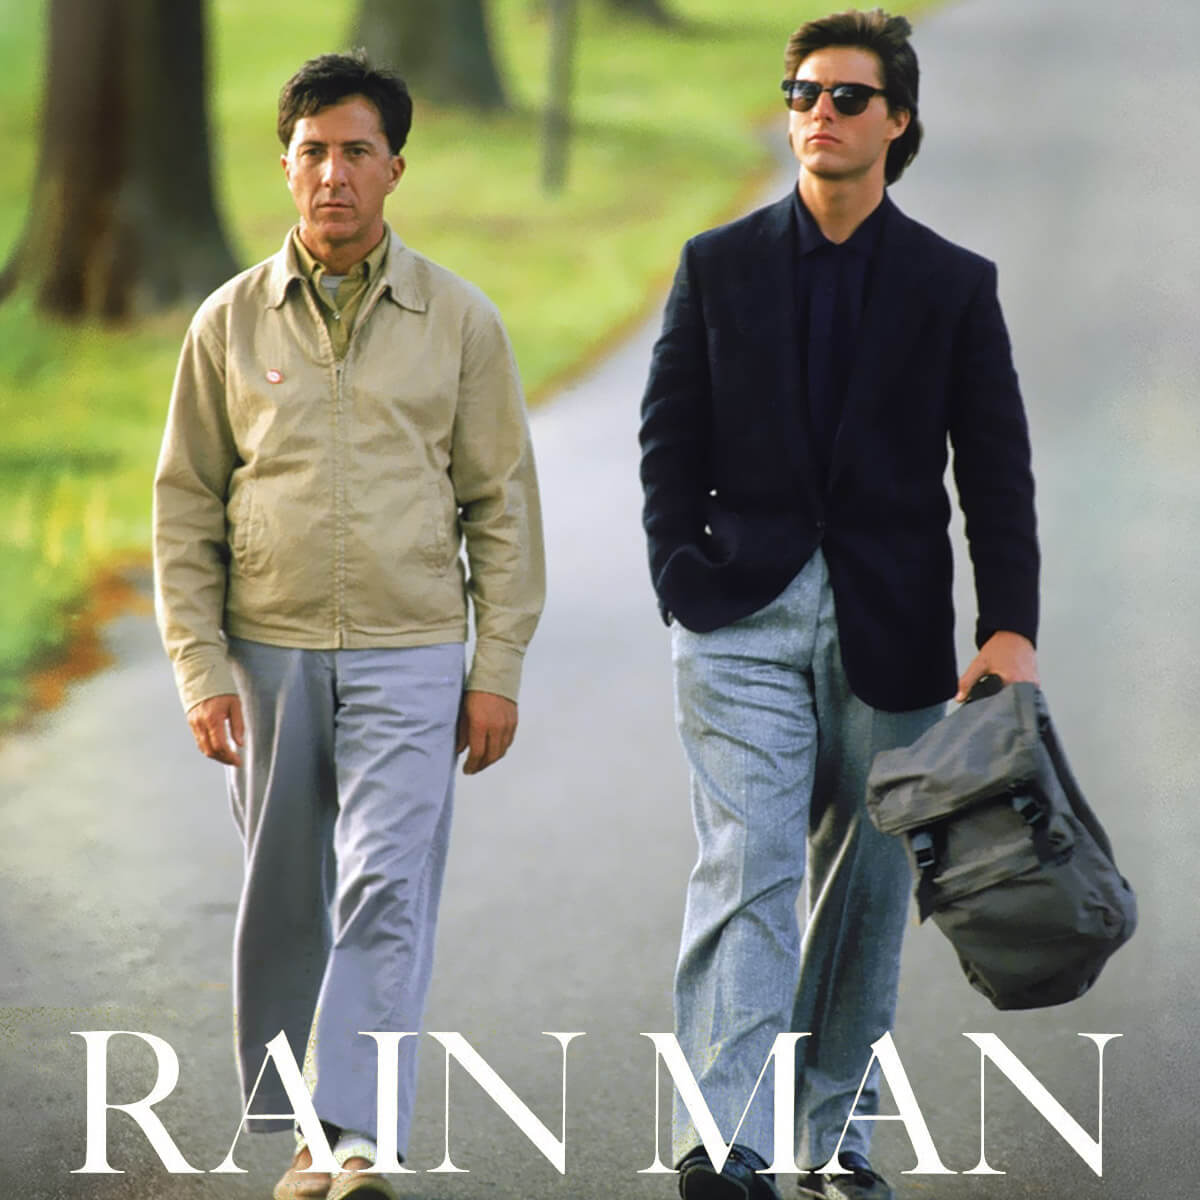 Musique du film Rain Man